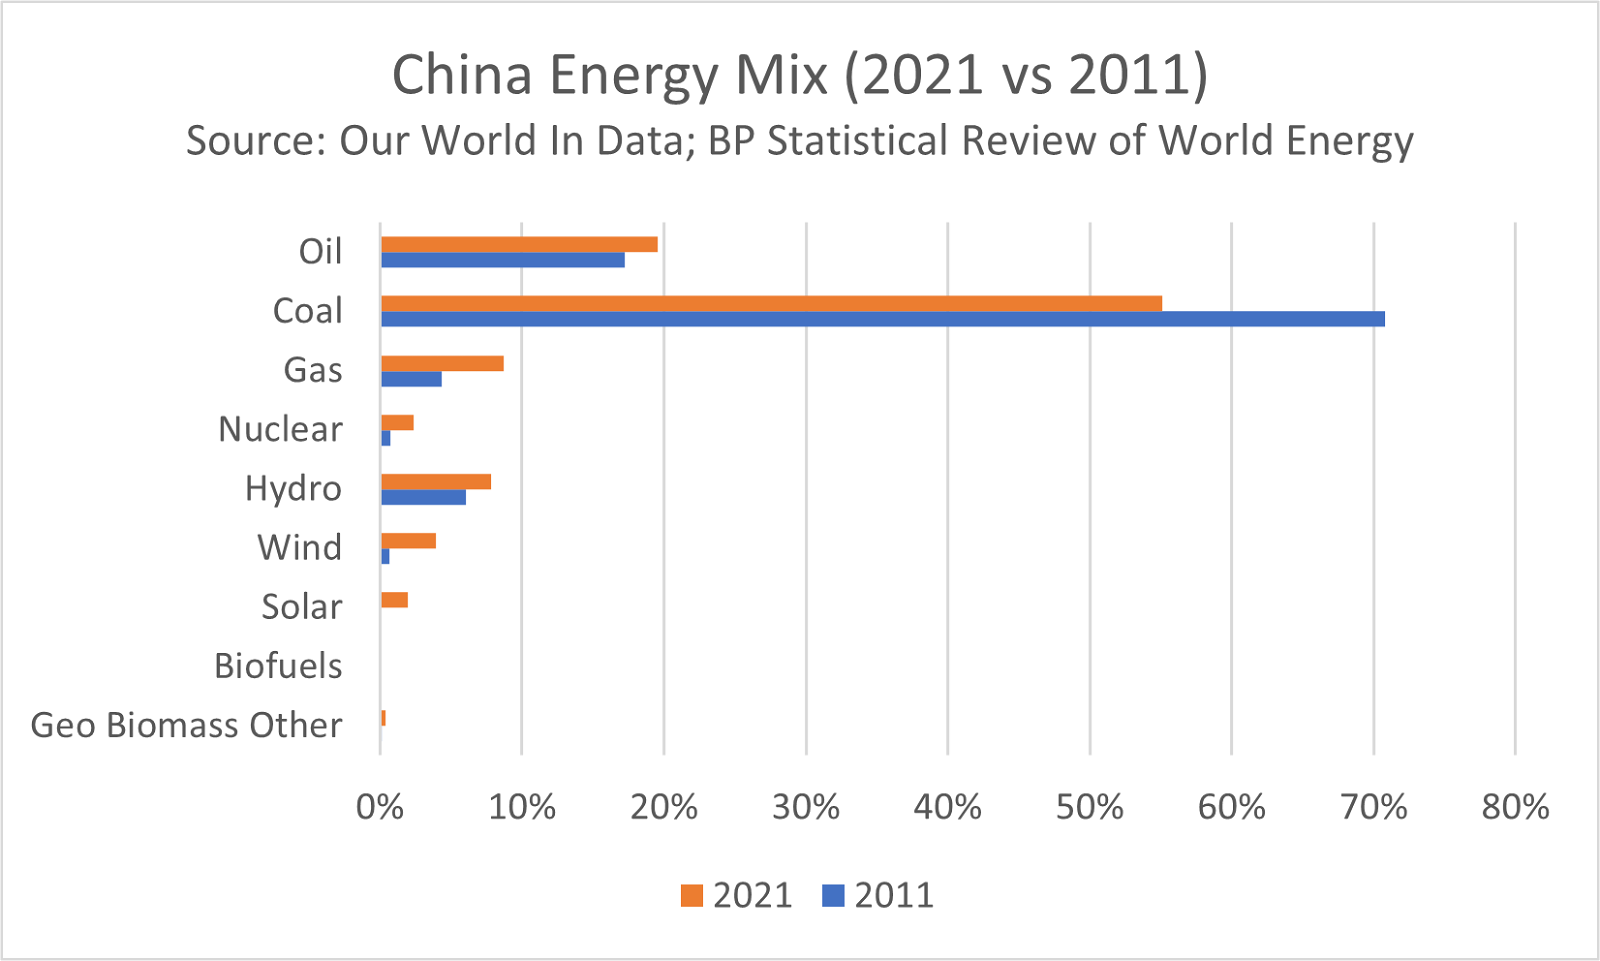 China energy mix 2021 vs. 2011